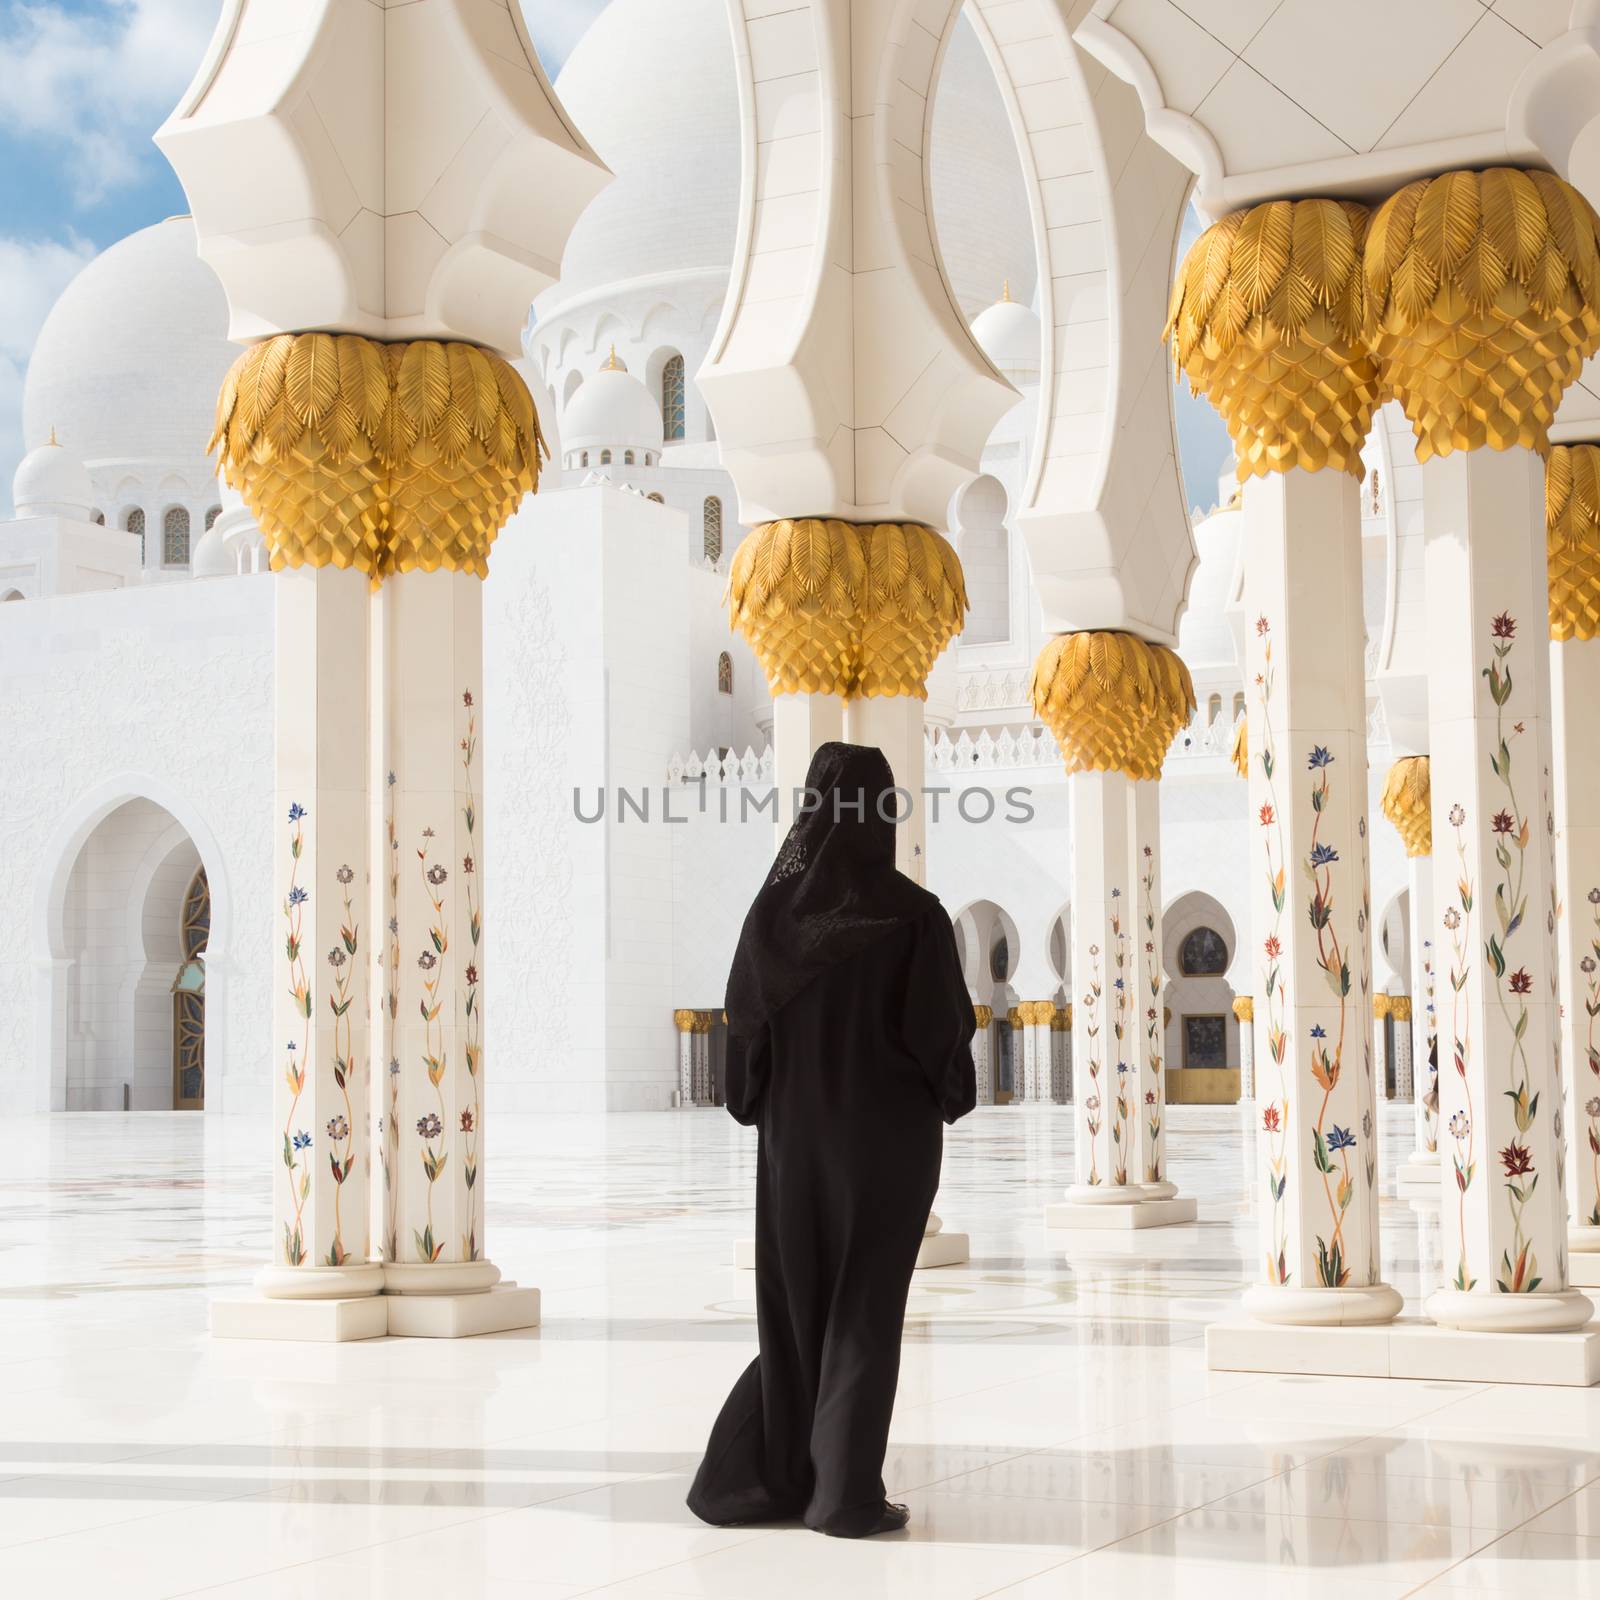 Traditionally dressed arabic woman wearing black burka wisiting Sheikh Zayed Grand Mosque in Abu Dhabi, United Arab Emirates by kasto